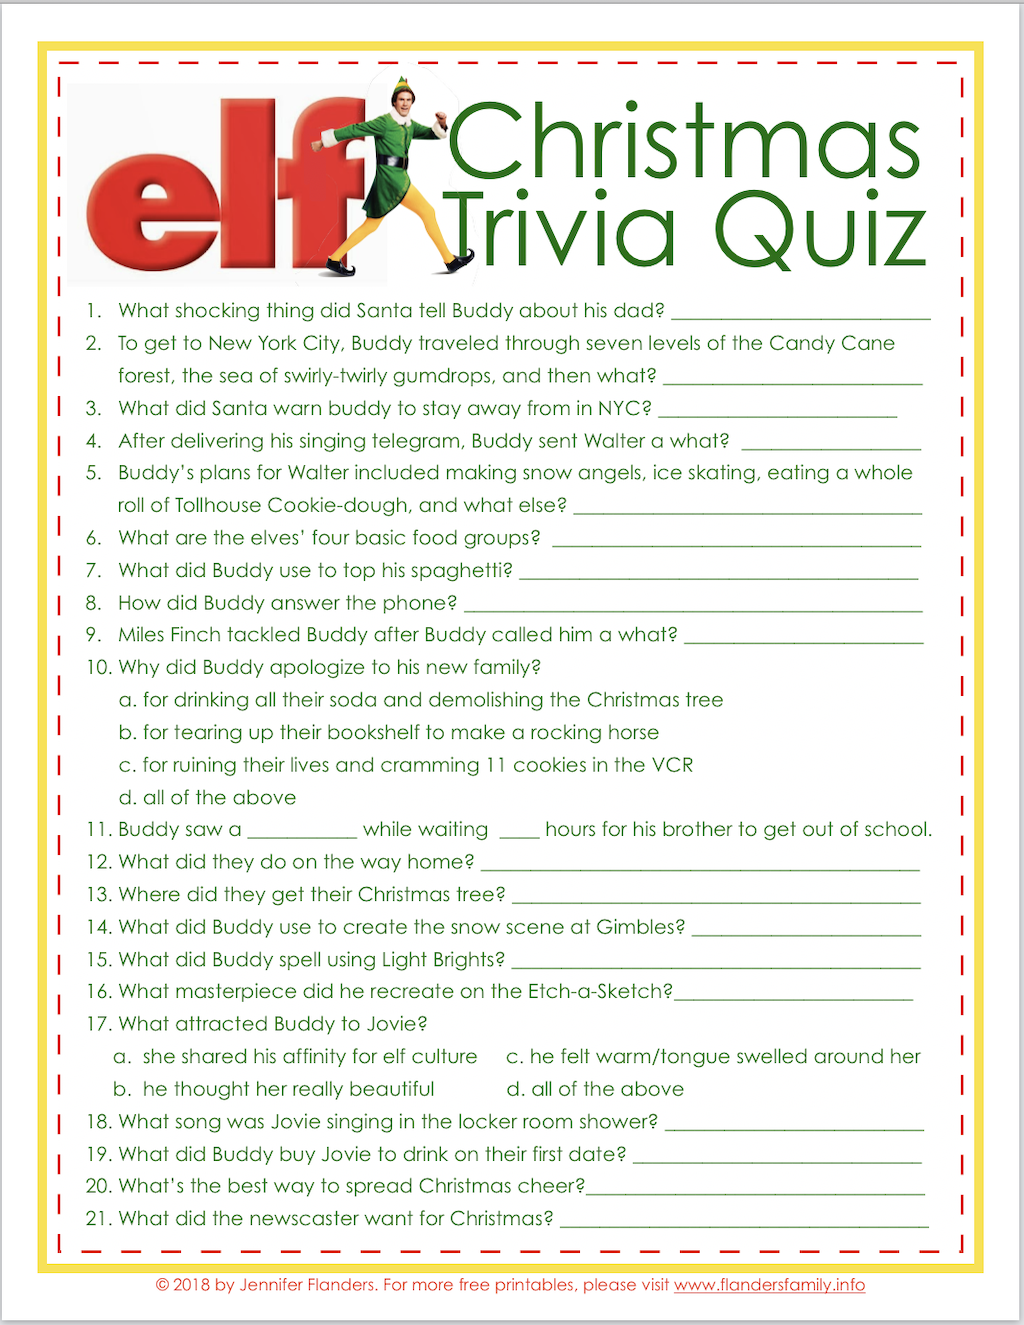 Elf Trivia Christmas Quiz Free Printable Flanders Family Homelife